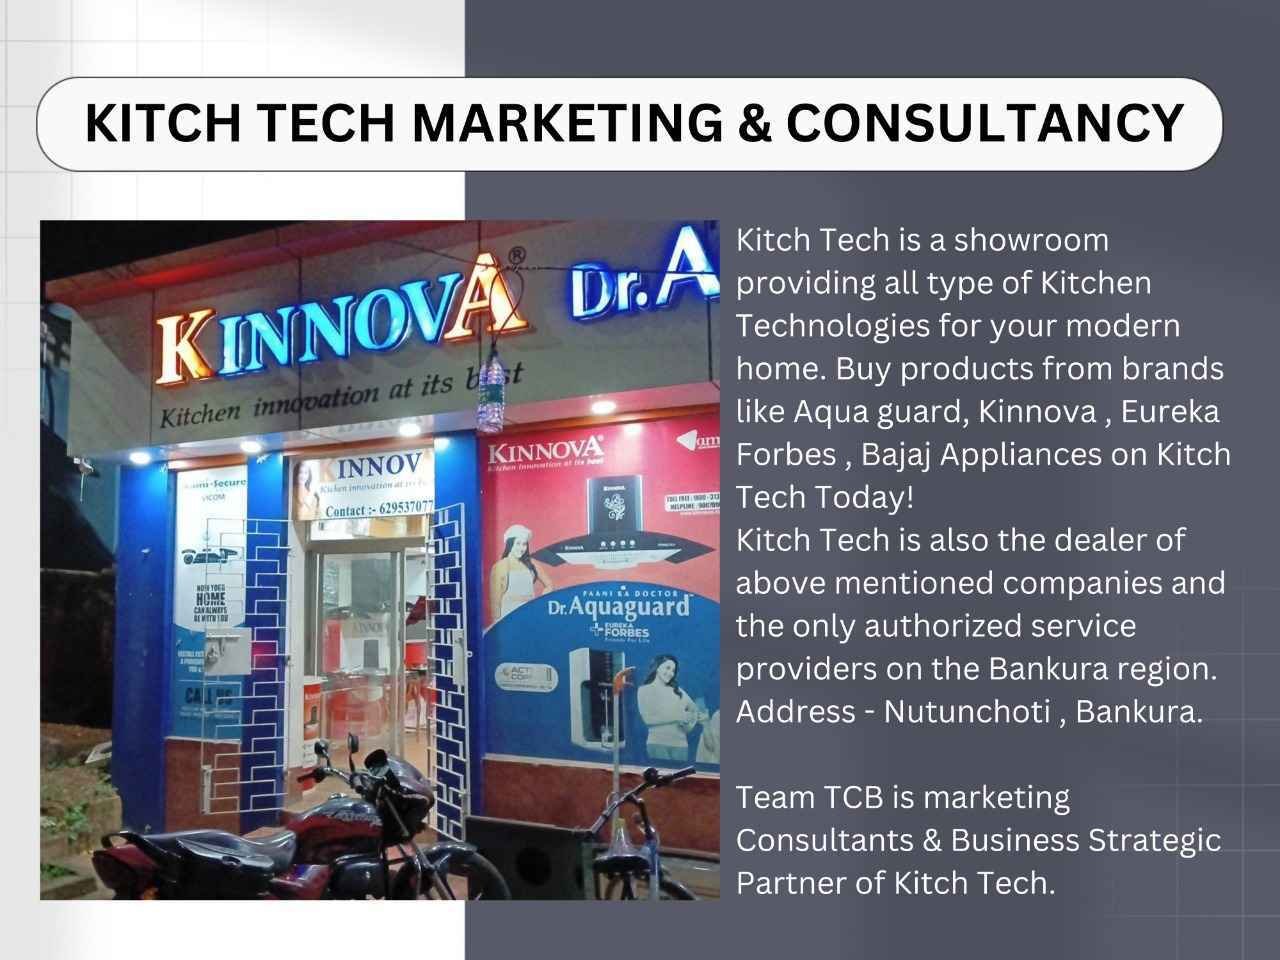 Kitch Tech Marketing & Consultancy